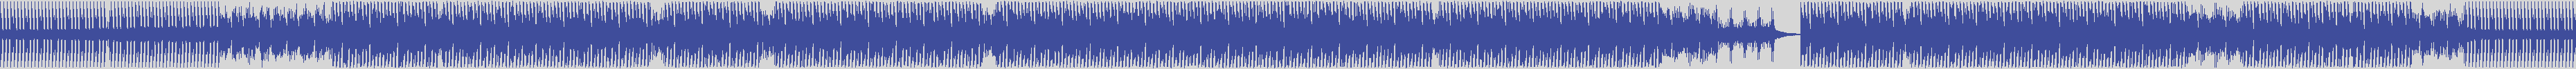 atomic_recordings [AR020] Lello B. - Line Out  [(Shout Vibe Mix)] audio wave form